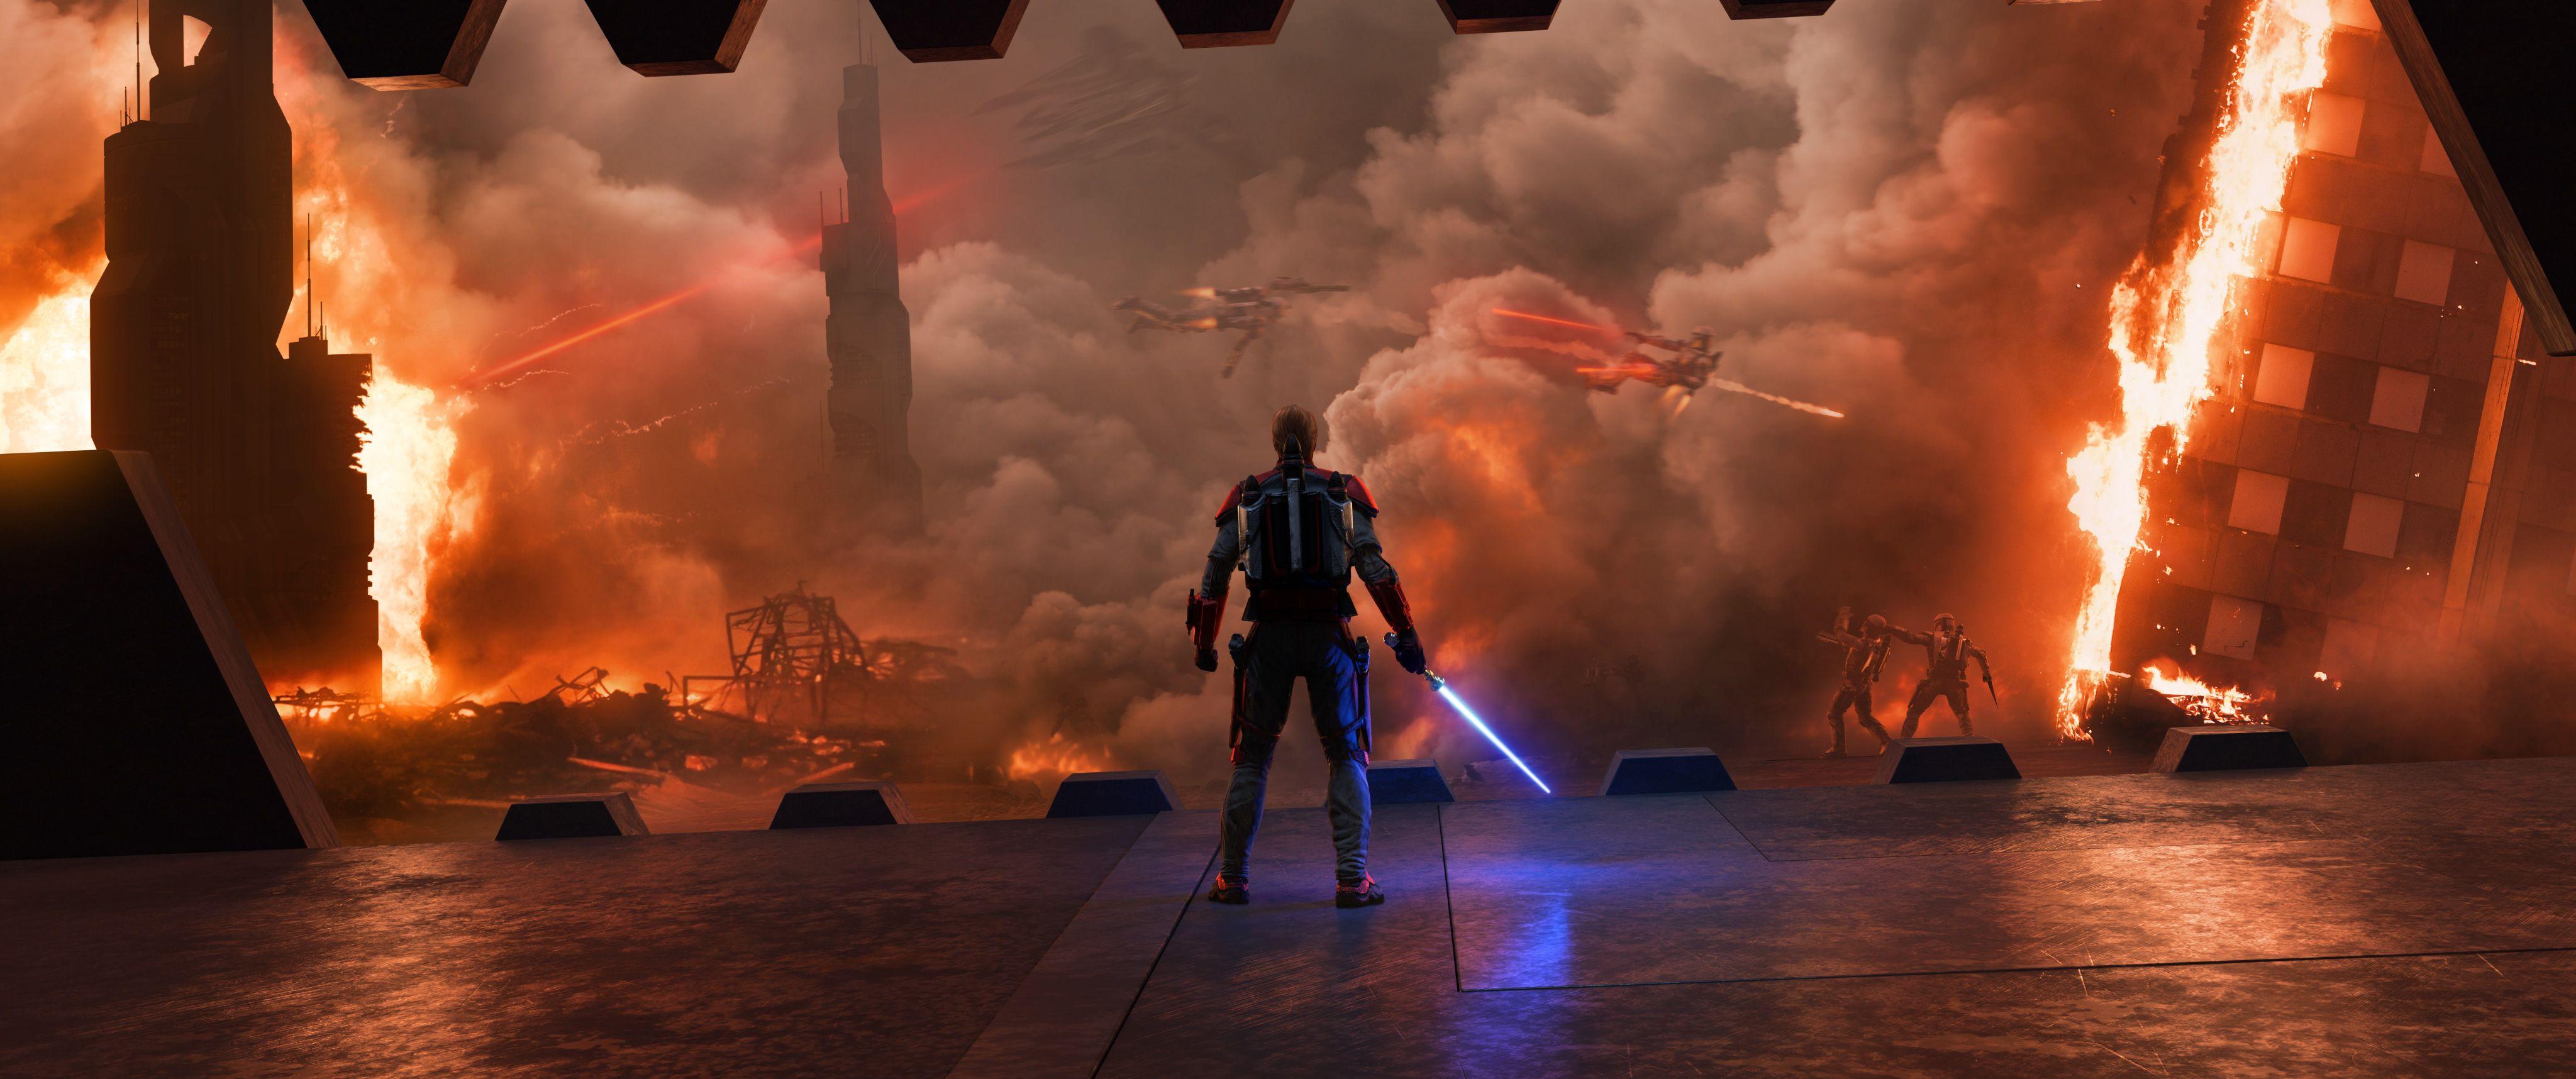 Star Wars Siege Of Mandalore, HD Artist, 4k Wallpaper, Image